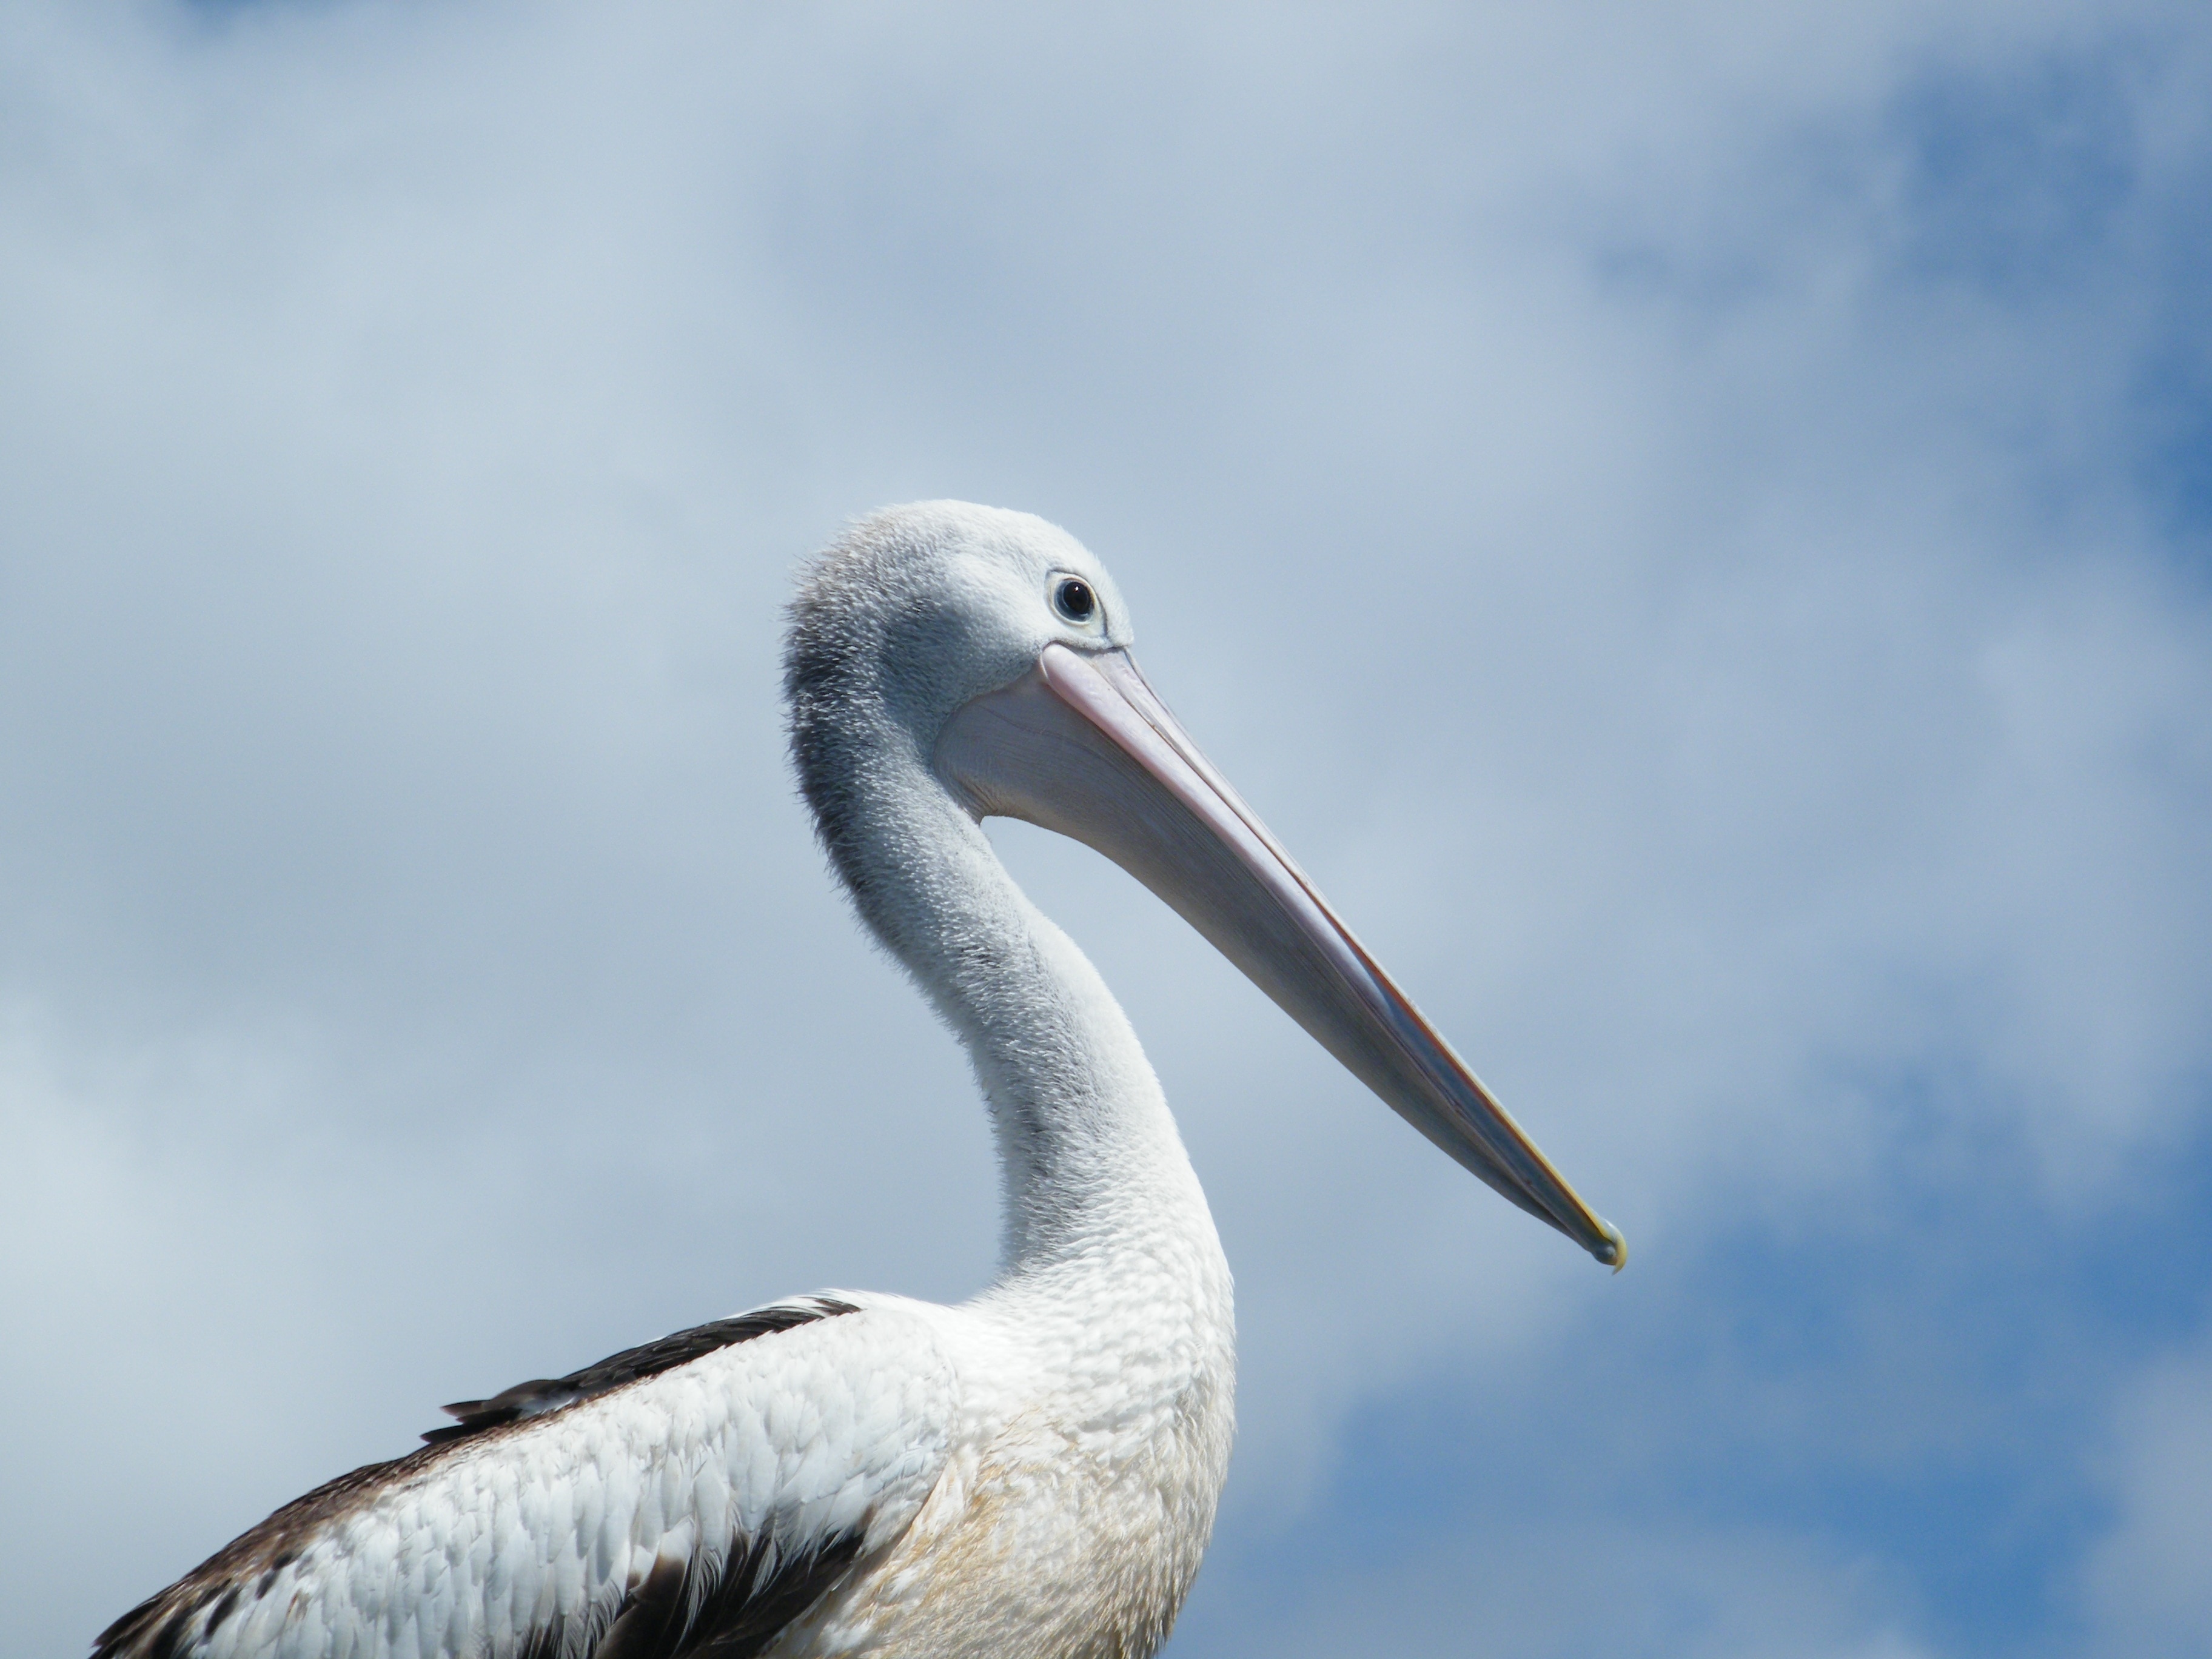 Pelican, Nature, Bird, Animal, bird, animals in the wild